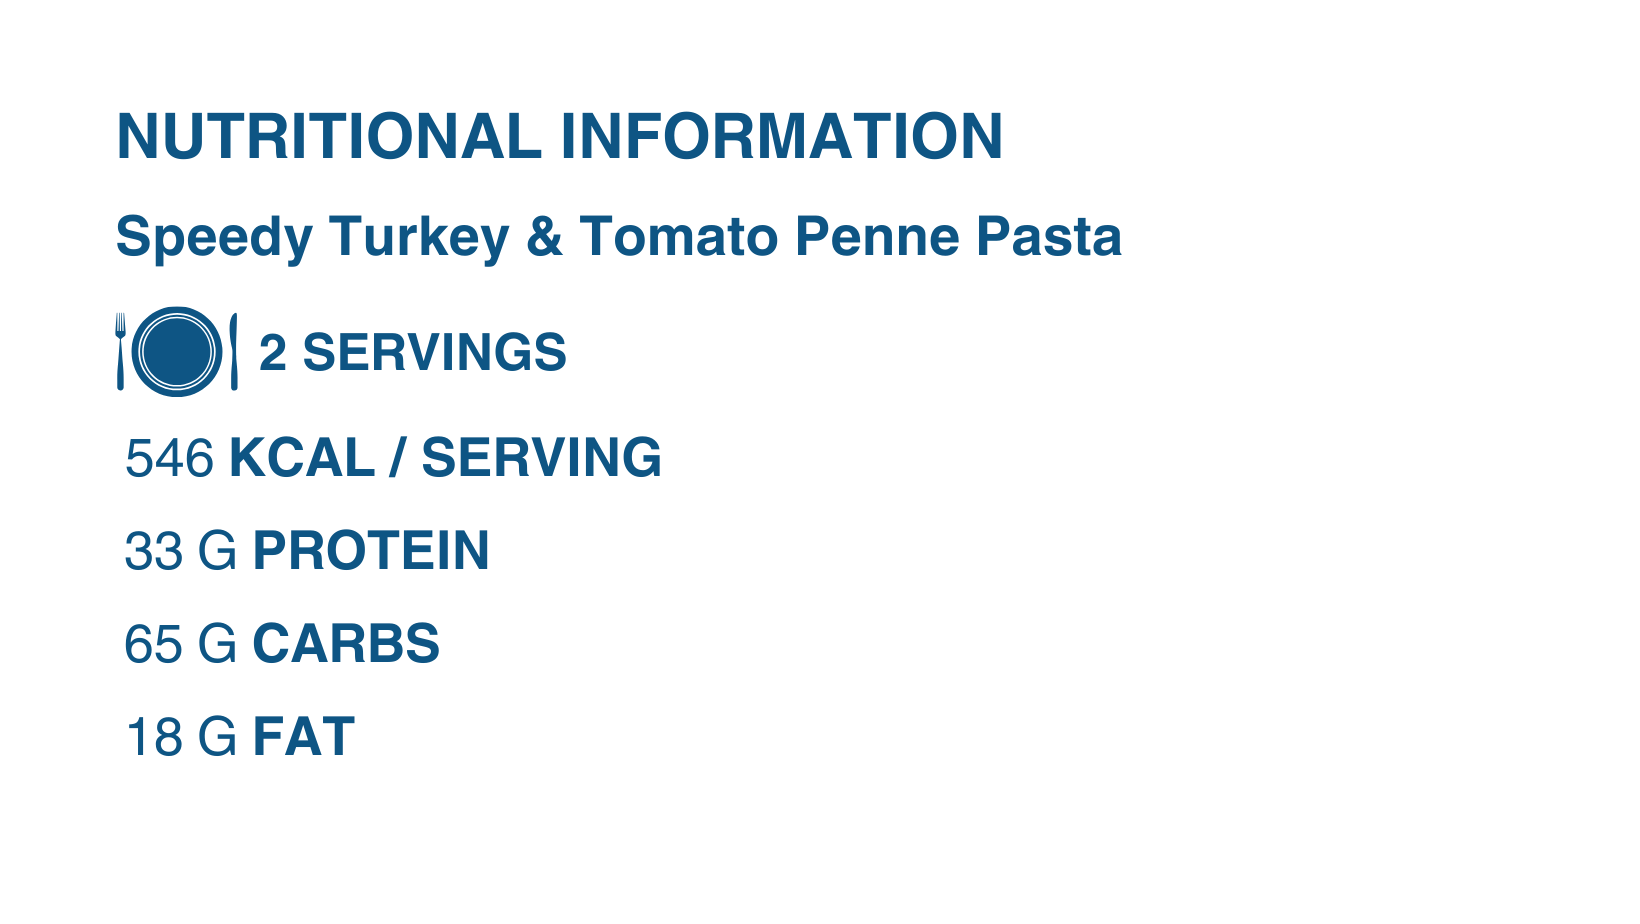 speedy-turkey-and-tomato-penne-pasta/